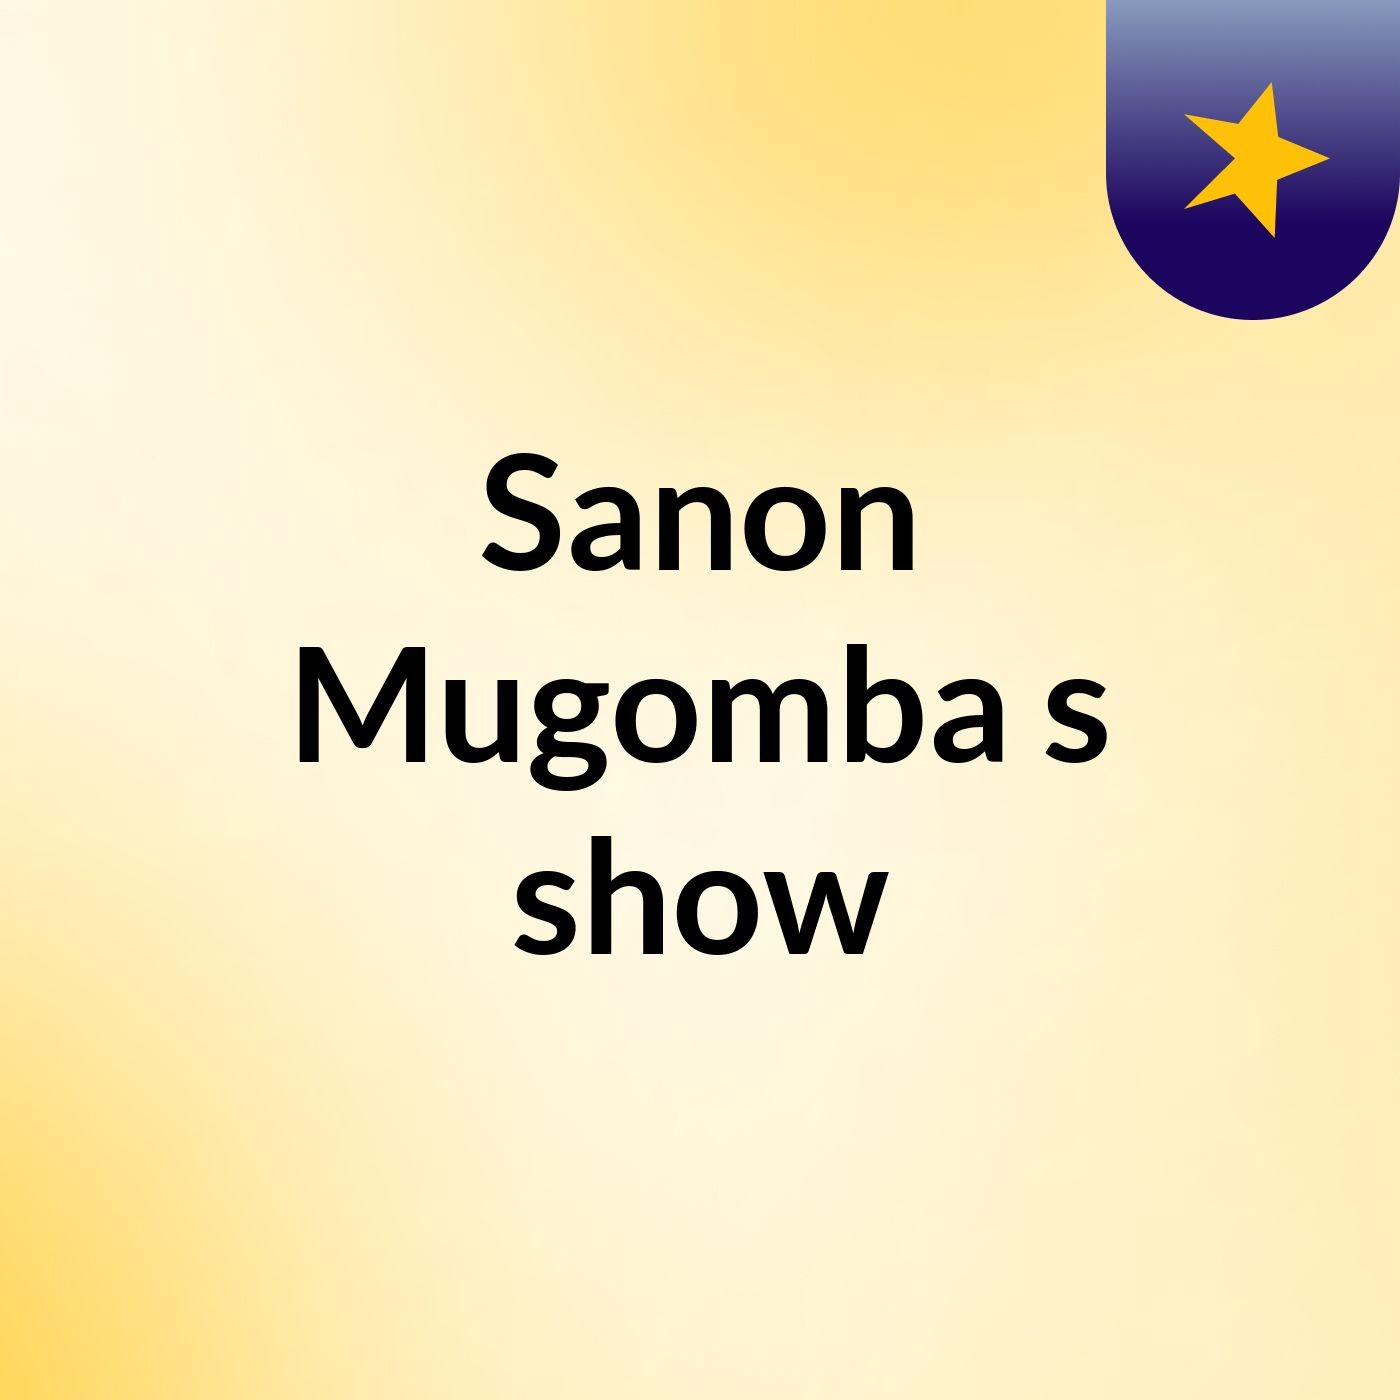 Sanon Mugomba's show